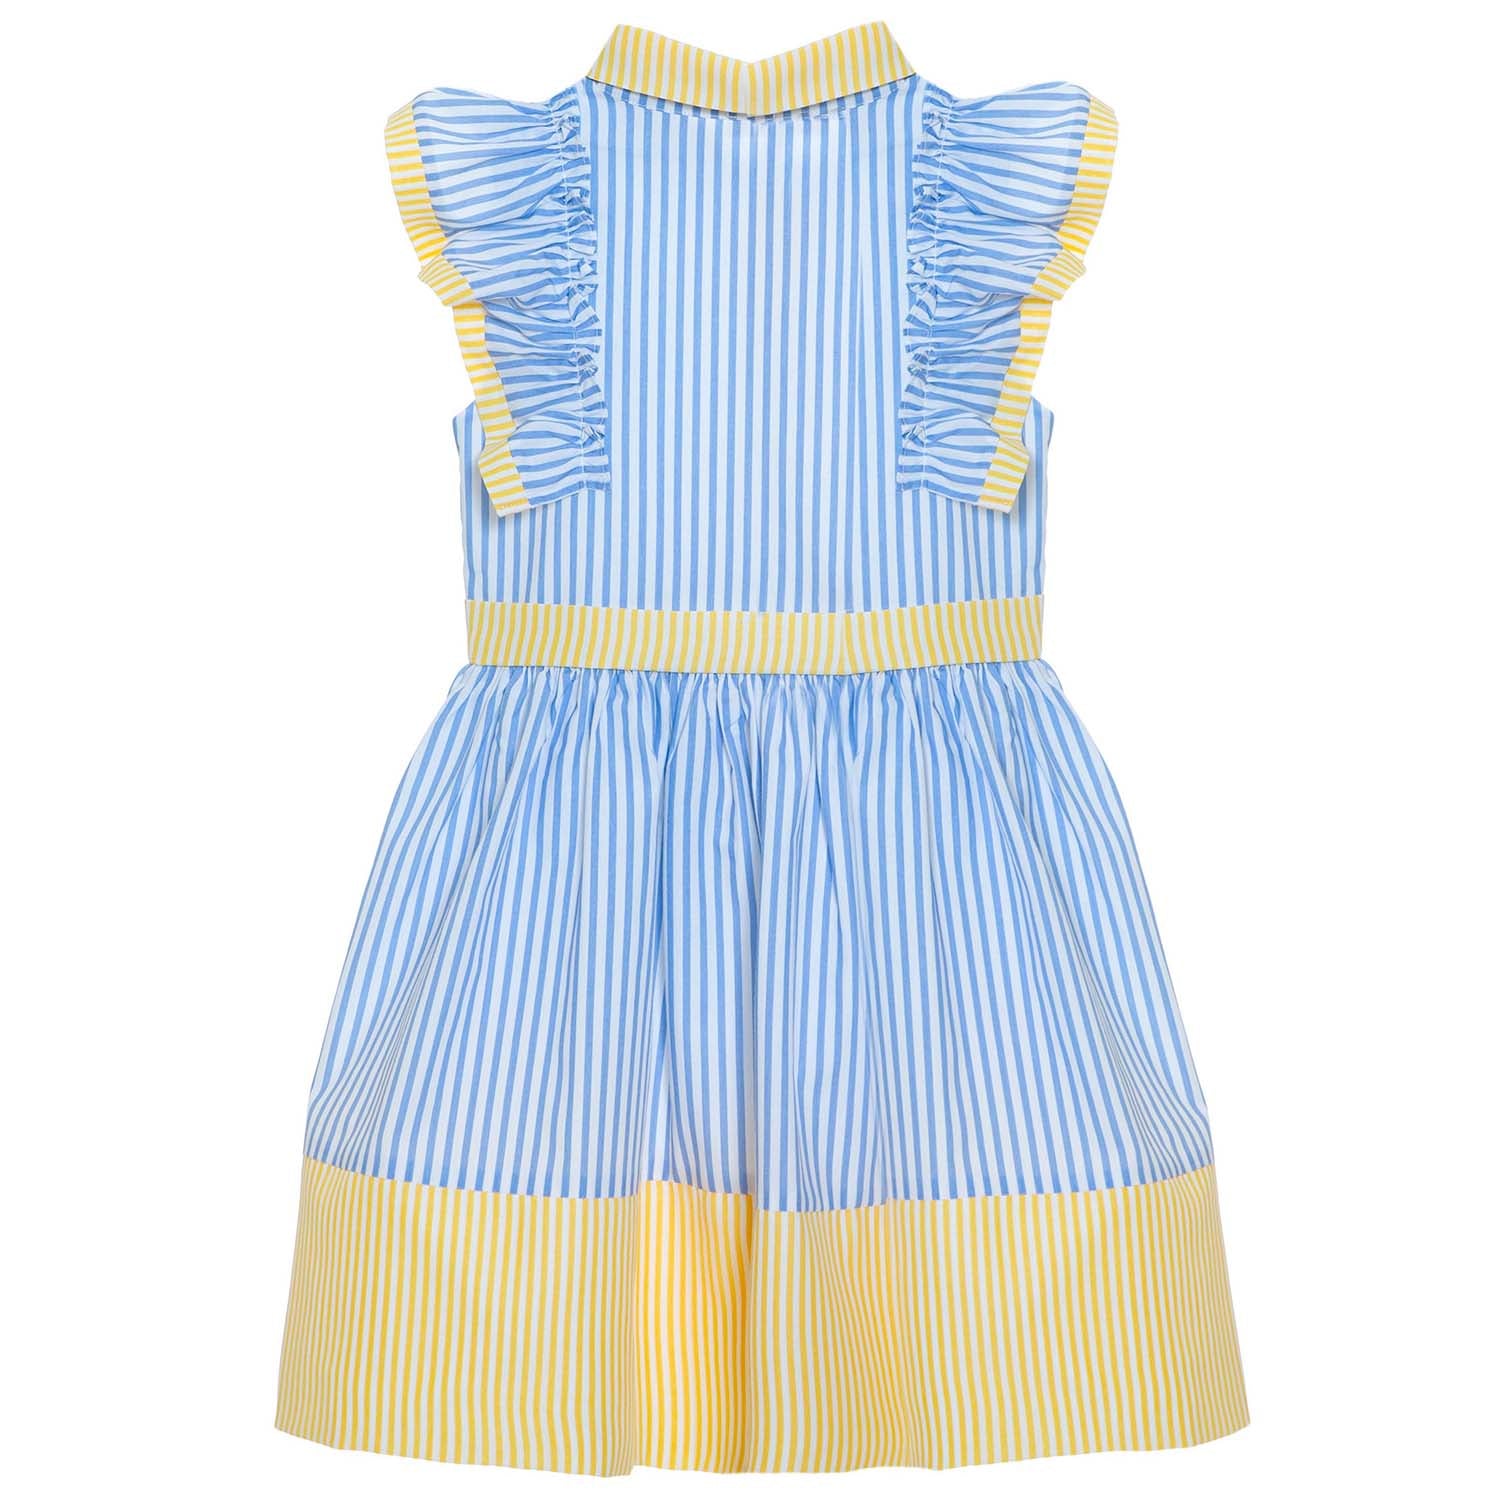 Blue And Yellow Stripe Dress